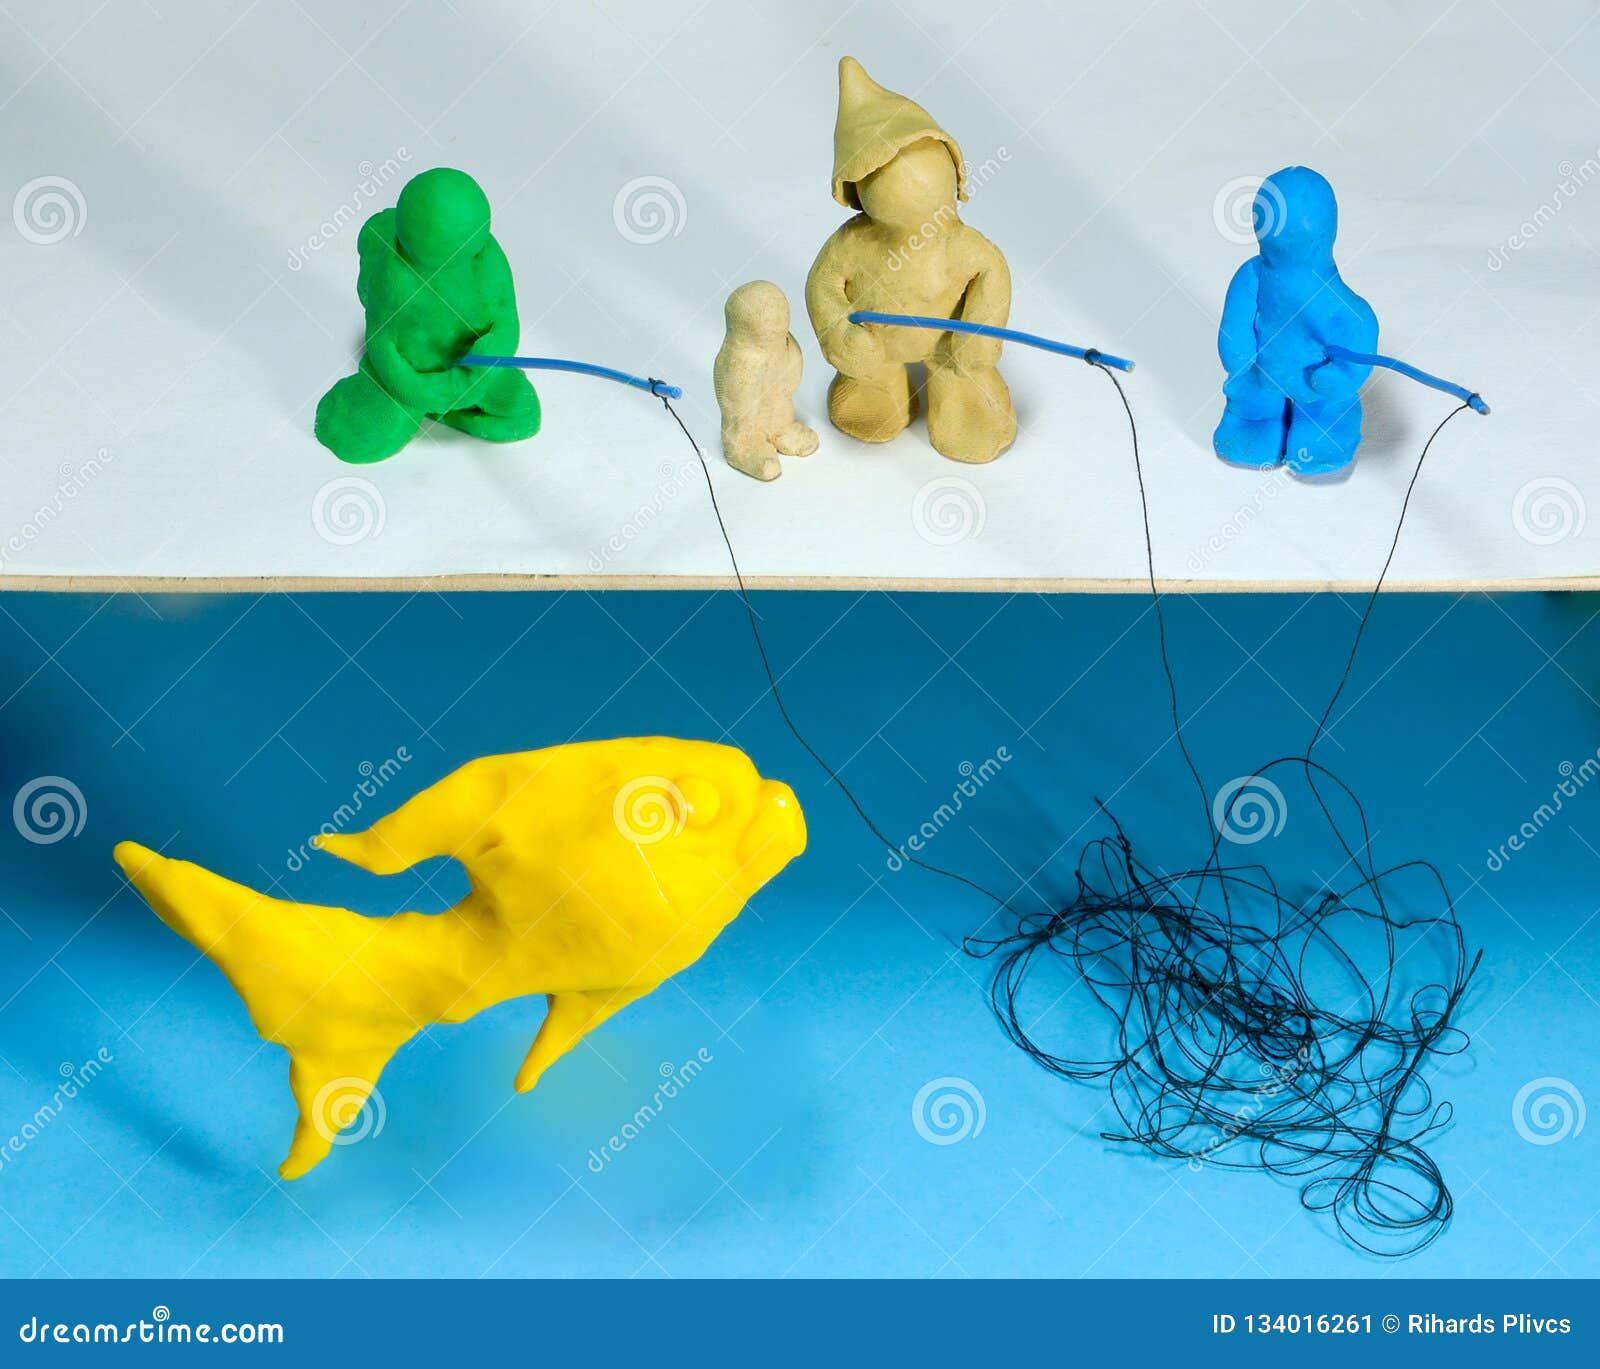 plasticine puppet fishing